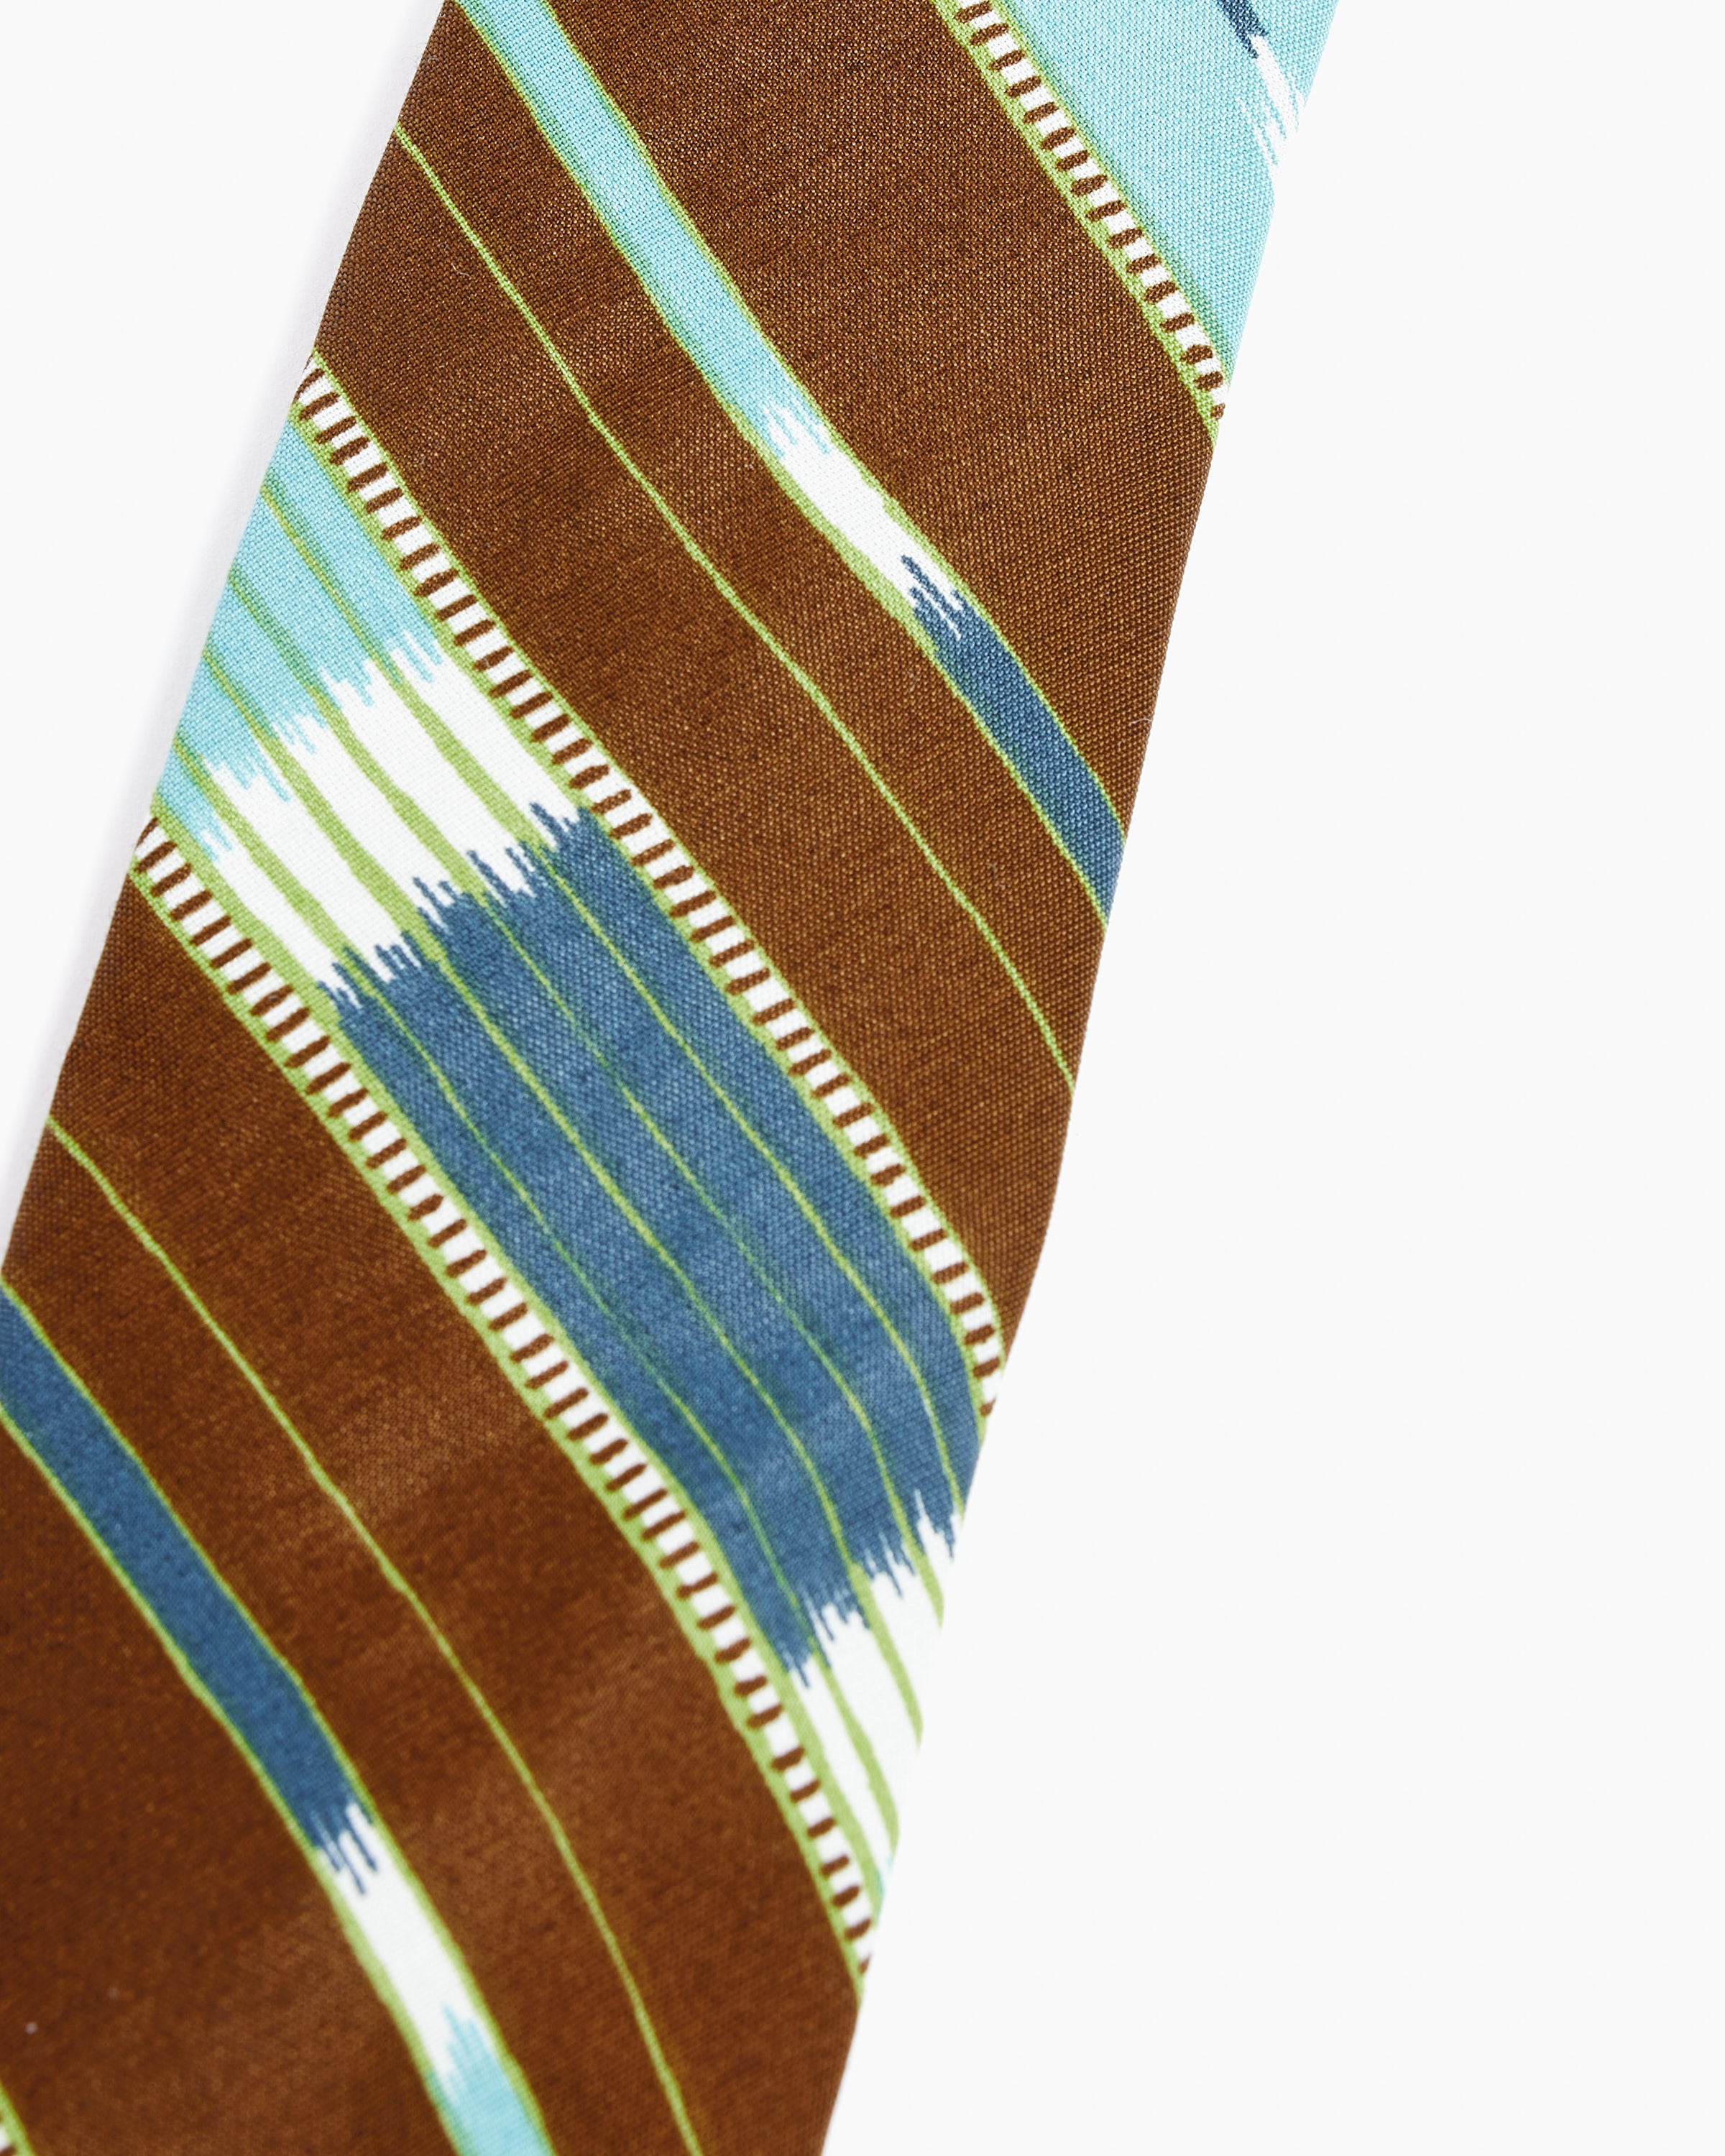 SMOCK x Gitman Vintage Tie in Rayon Beaded Stripe